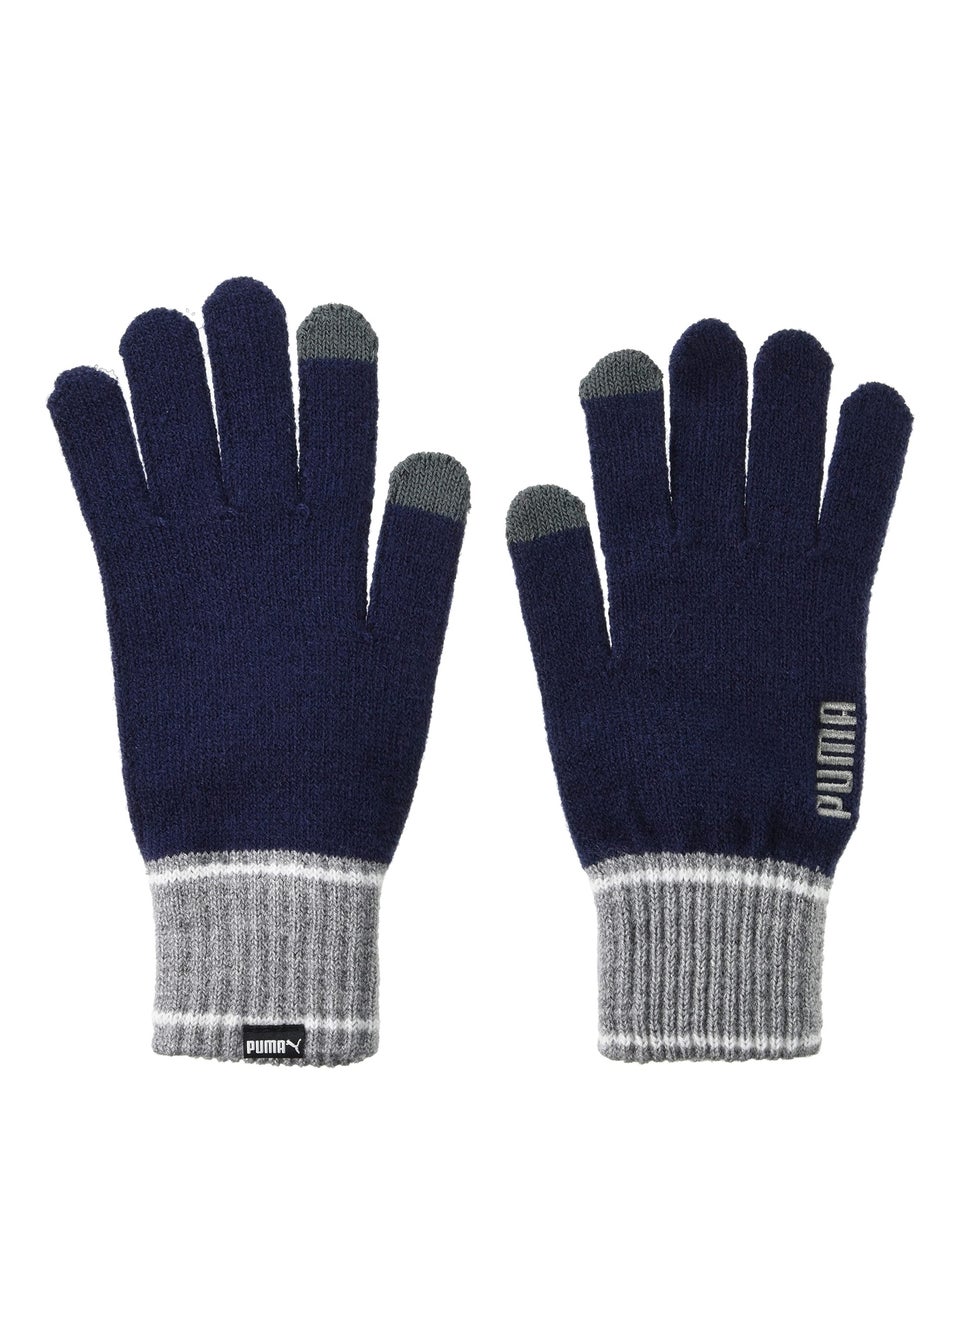 Puma Navy Knitted Winter Gloves